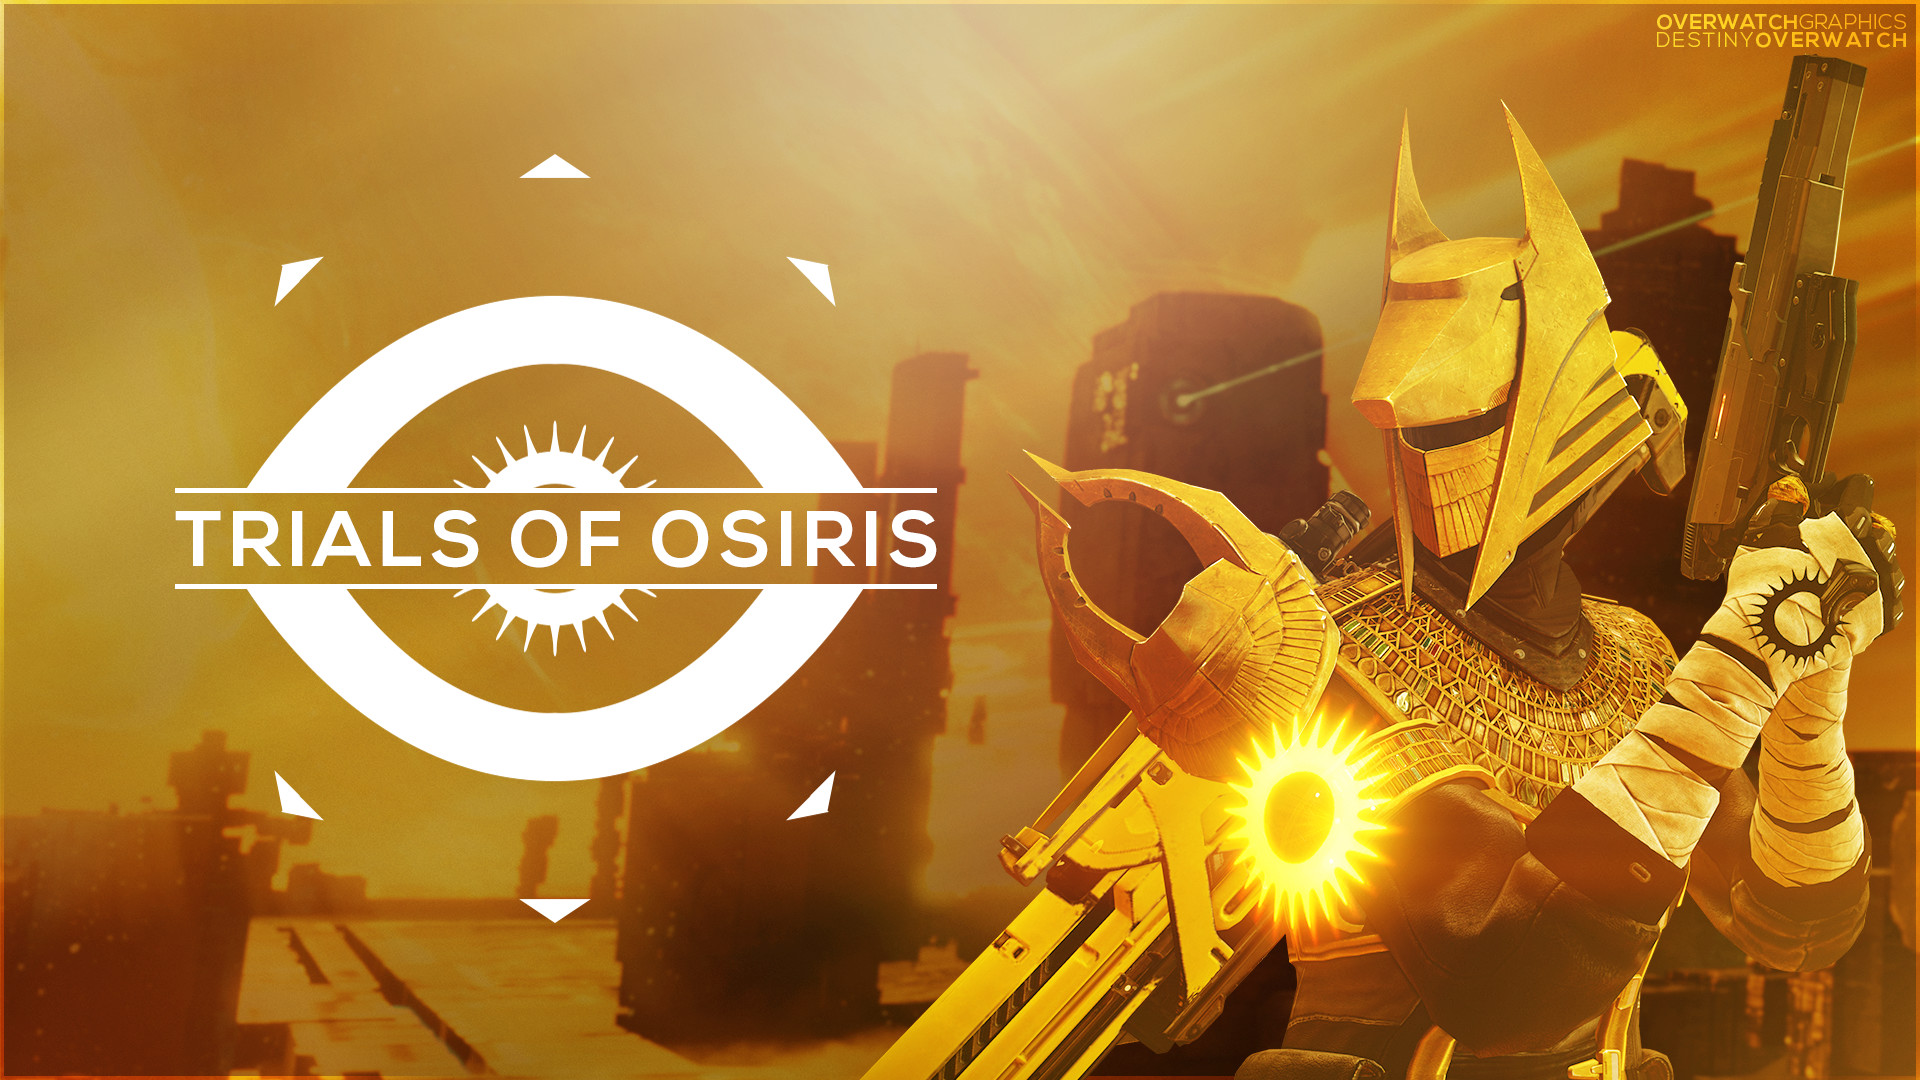 1920x1080 ... OverwatchGraphics Destiny - Trials of Osiris Warlock Wallpaper by  OverwatchGraphics